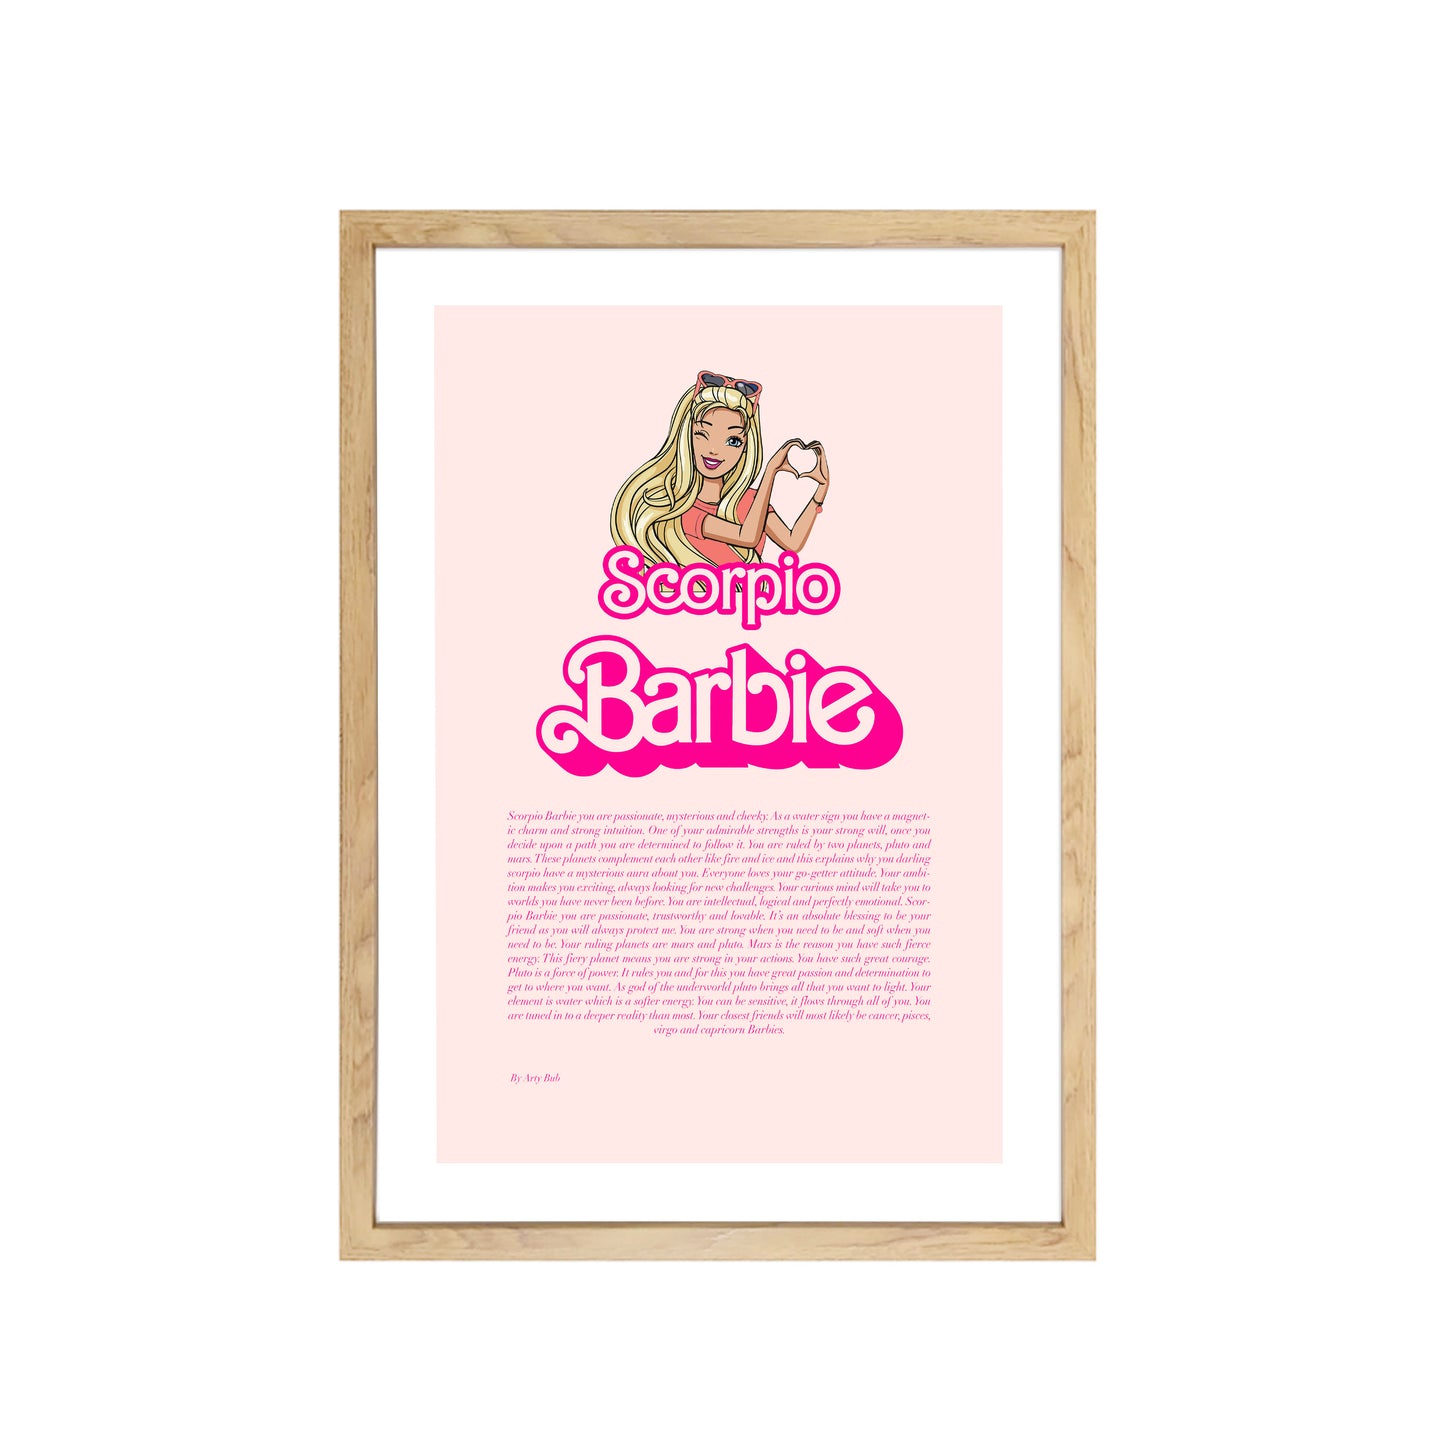 Scorpio Barbie Zodiac Art Print